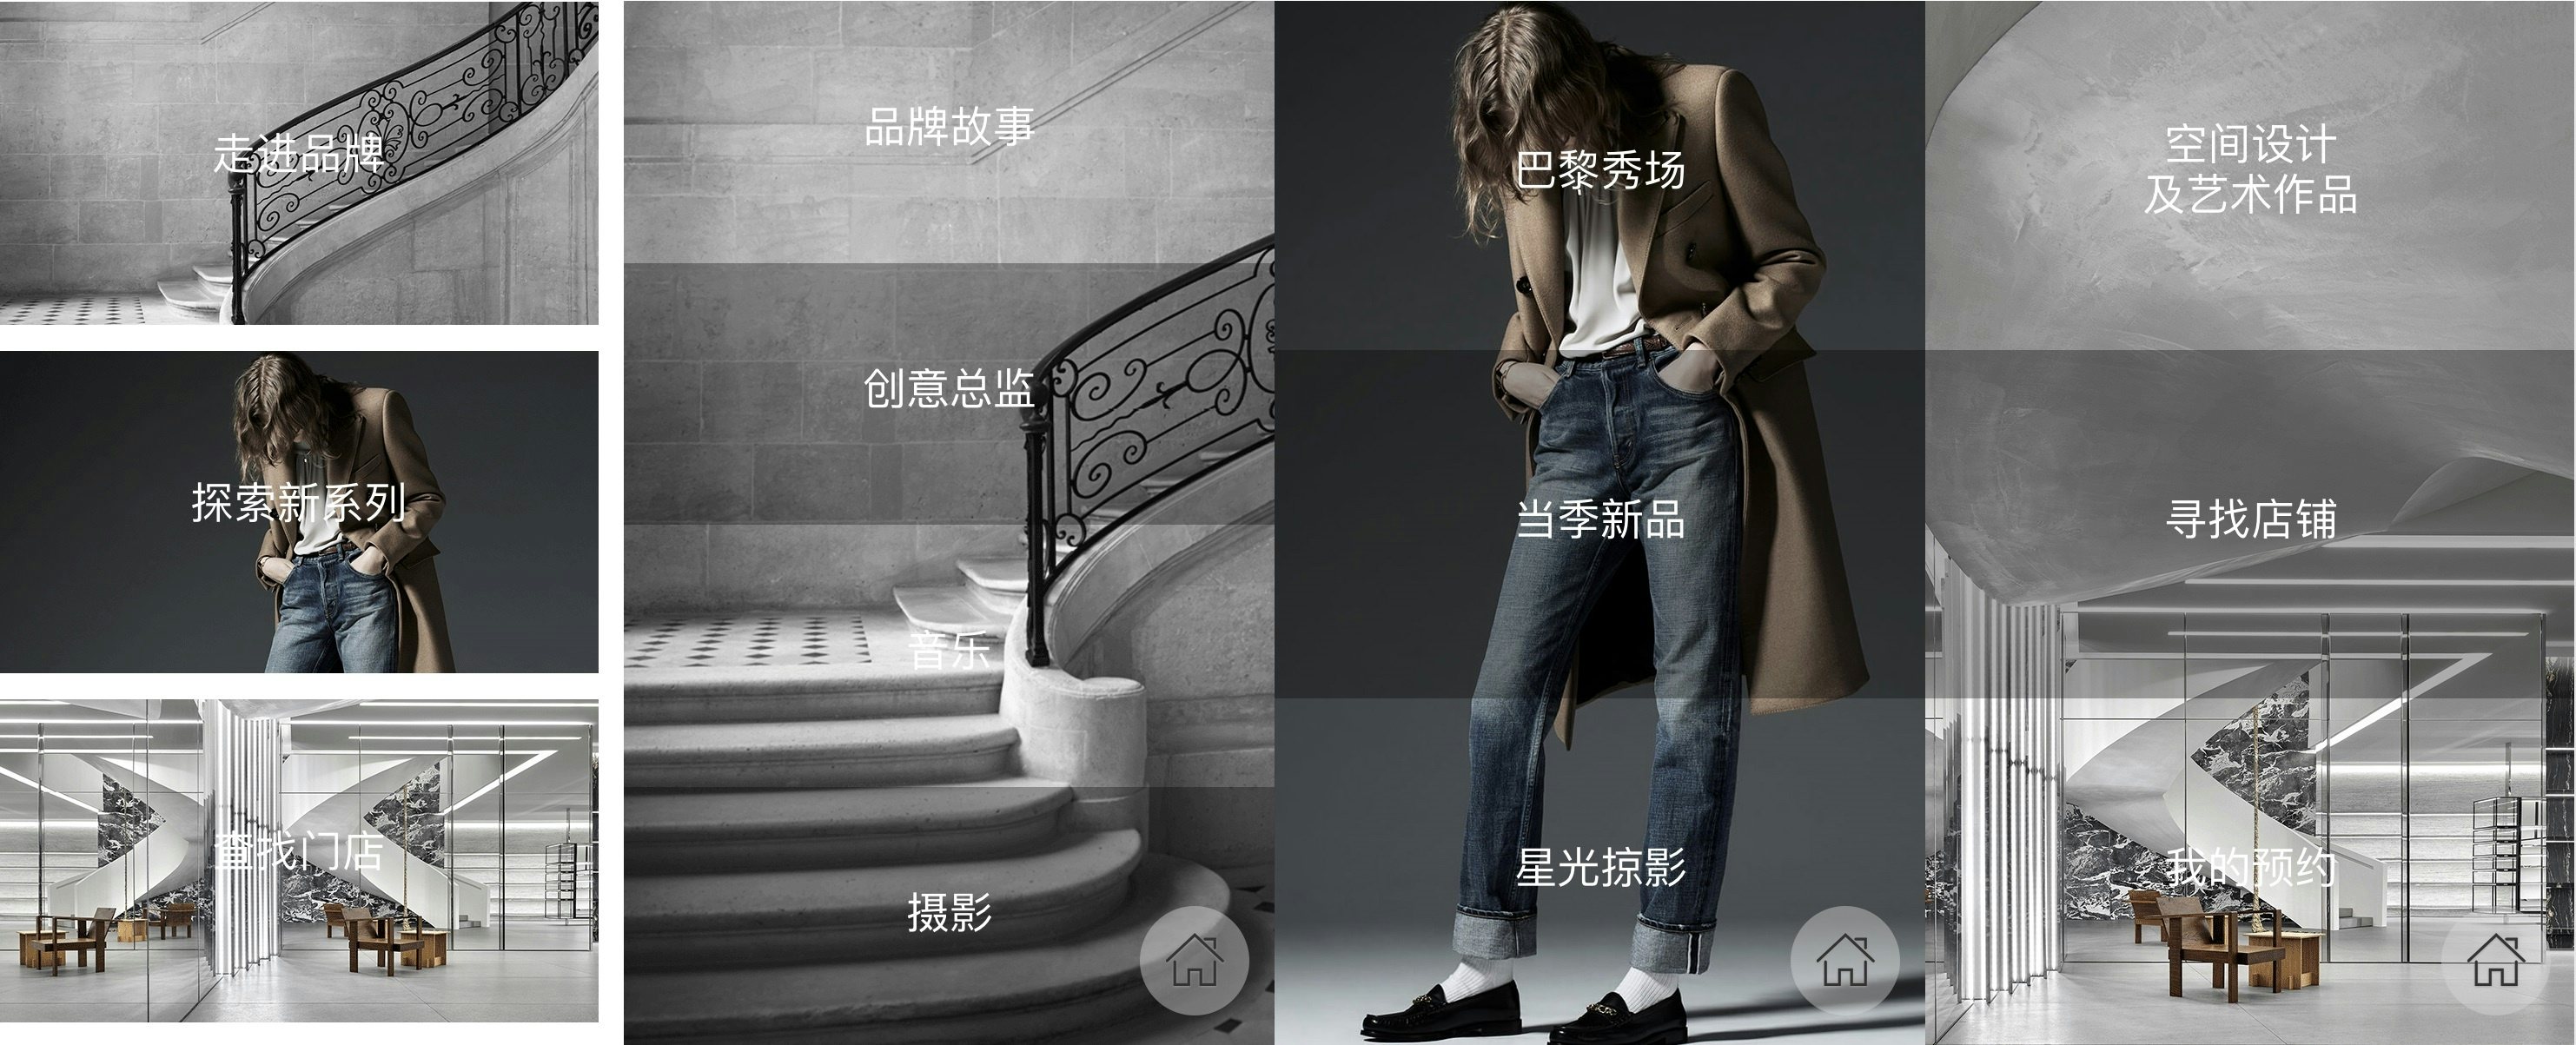 An illustration of Celine's WeChat mini program